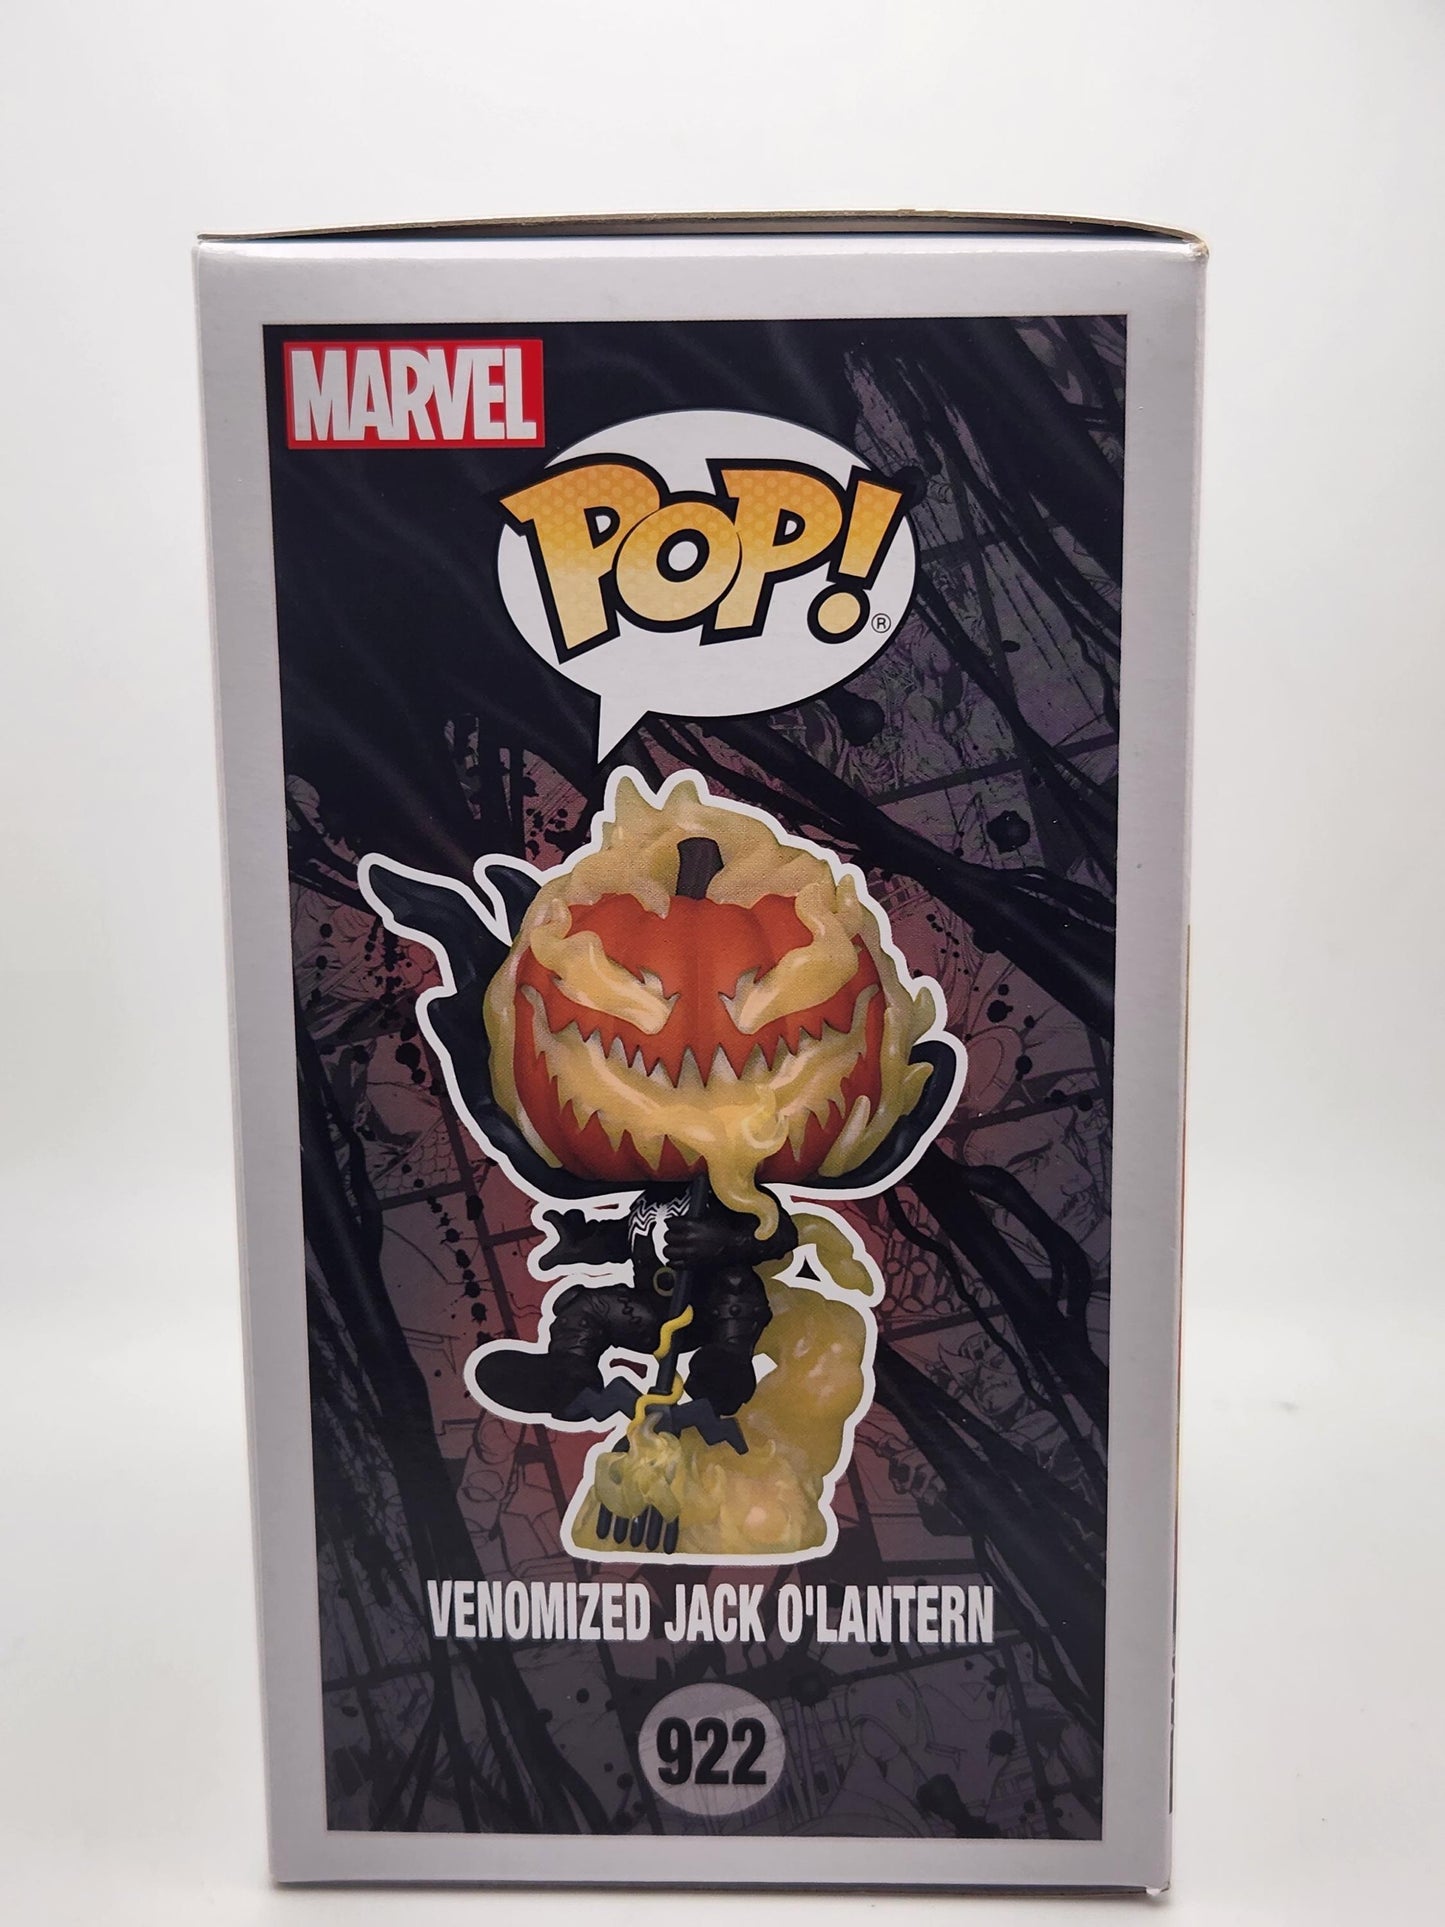 Venomized Jack O'Lantern - #922 - Box Condition 8/10